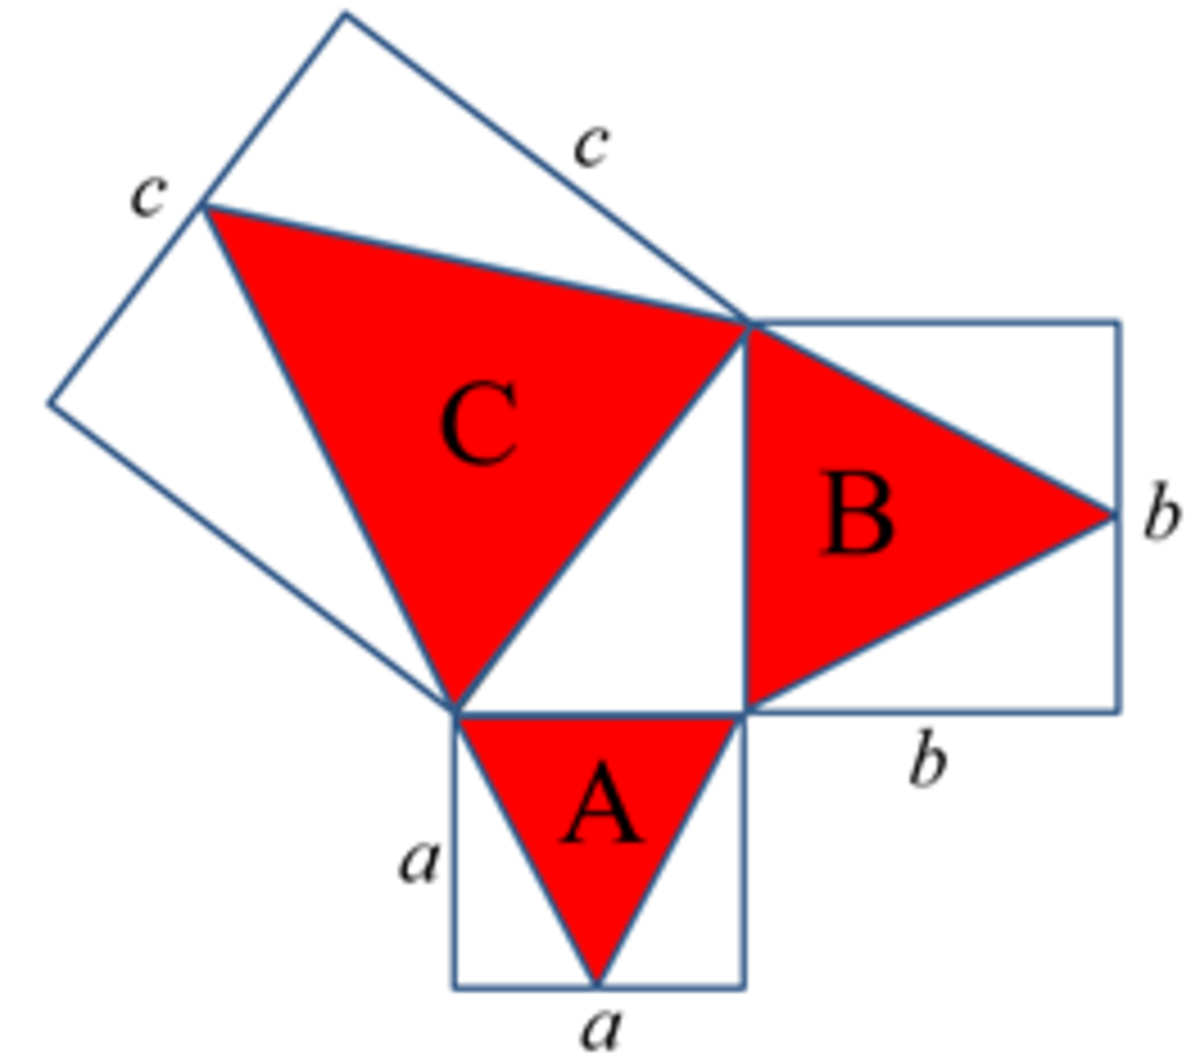 Showing how Pythagoras’ theorem applies to regular triangles